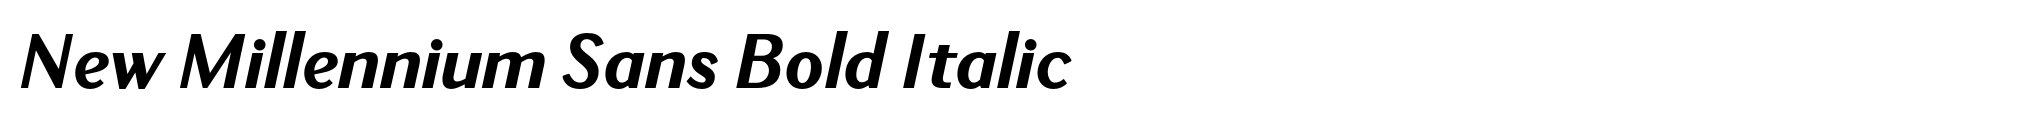 New Millennium Sans Bold Italic image